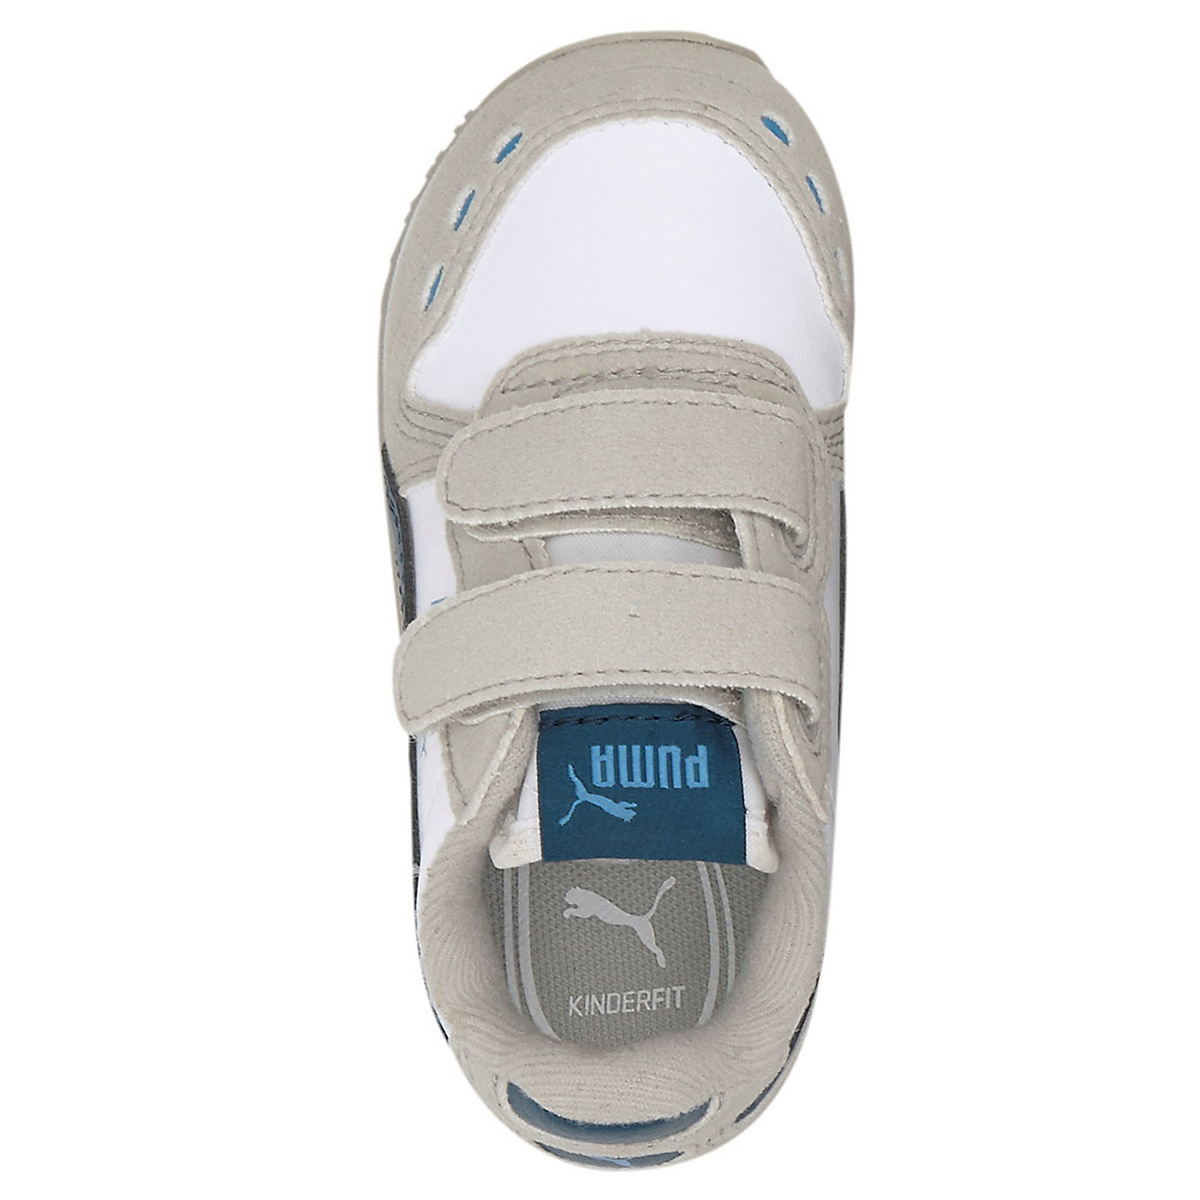 PUMA Cabana Racer SL V Inf Kinder Sneaker Klettverschluss Weiß / Blau 351980